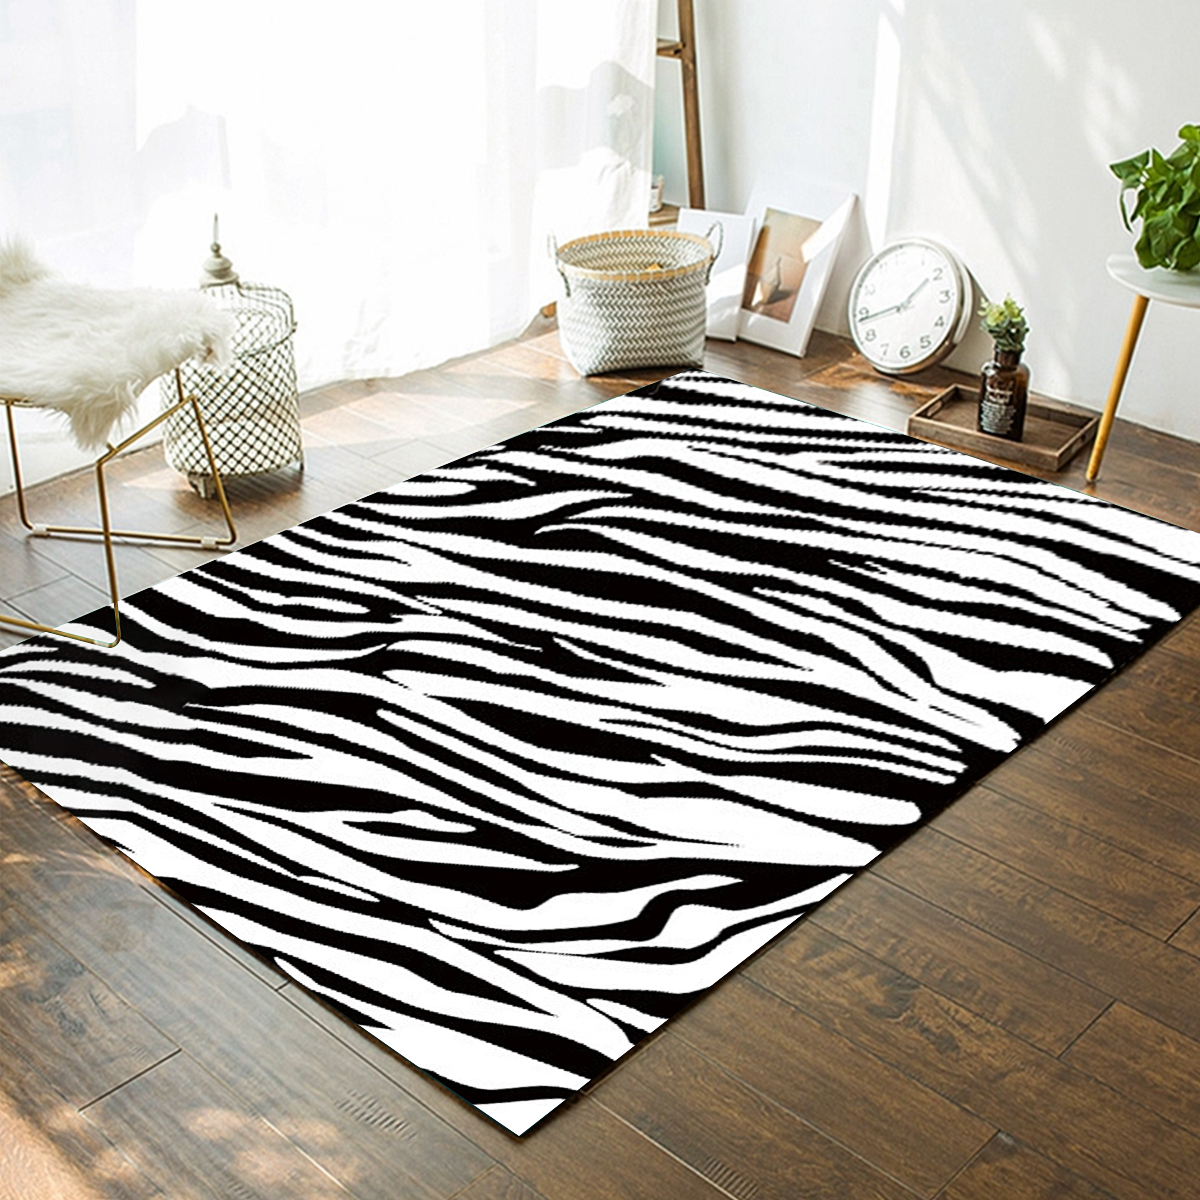 Modern-Minimalist-3D-Printed-Carpet-Living-Room-Bedroom-Bedside-Coffee-Table-Study-Restaurant-Hall-F-1730405-1